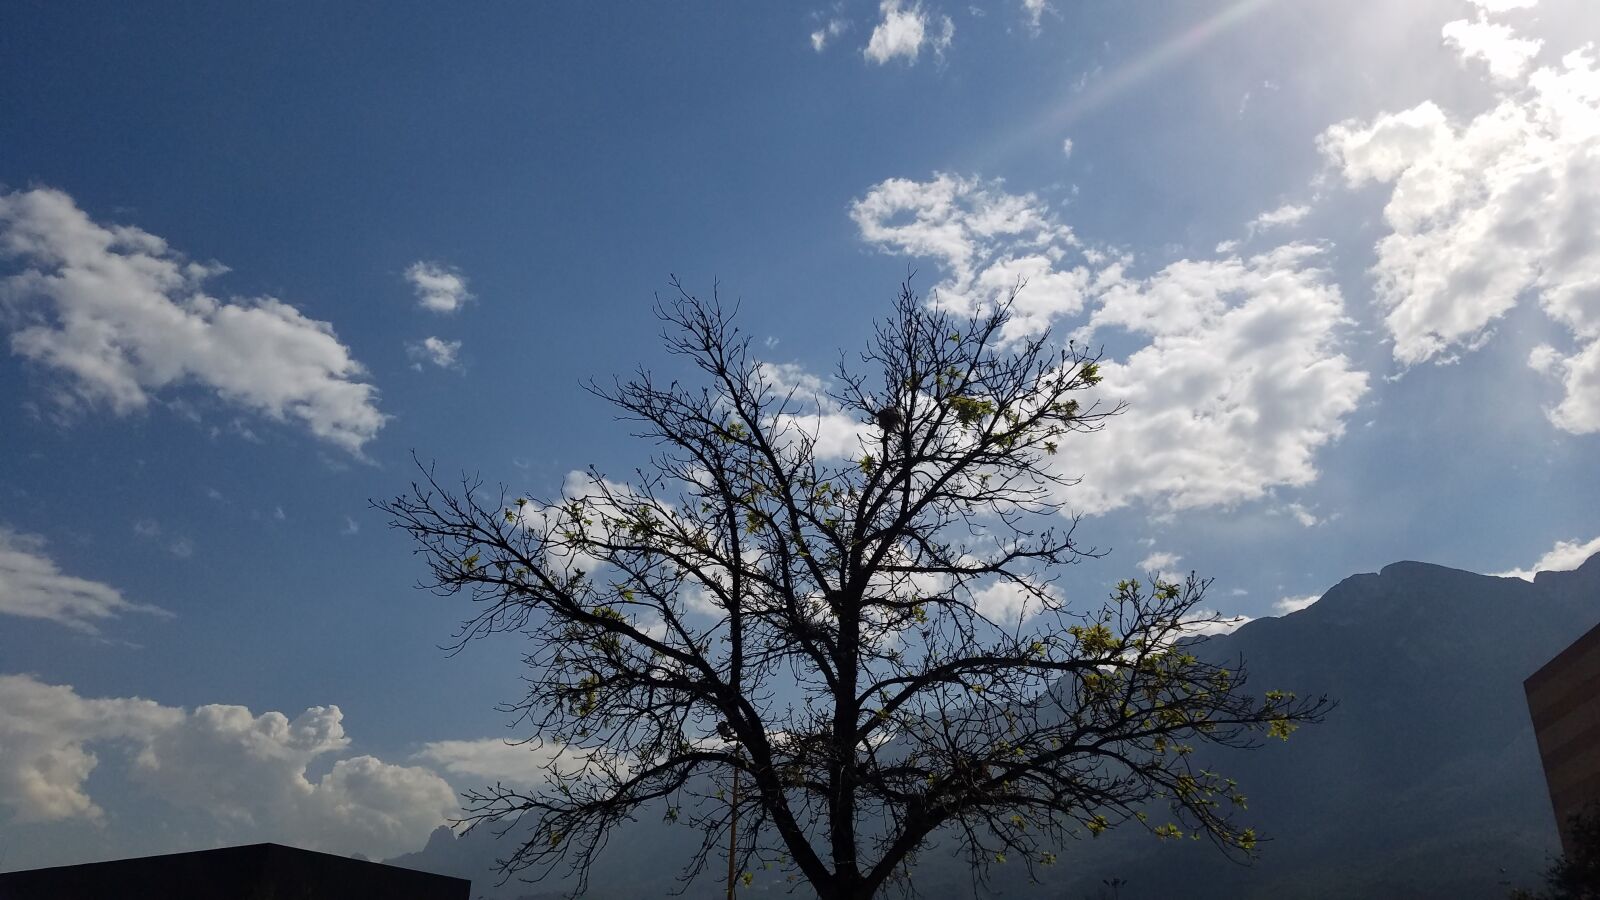 Samsung Galaxy S7 sample photo. Tree, monterrey, college photography